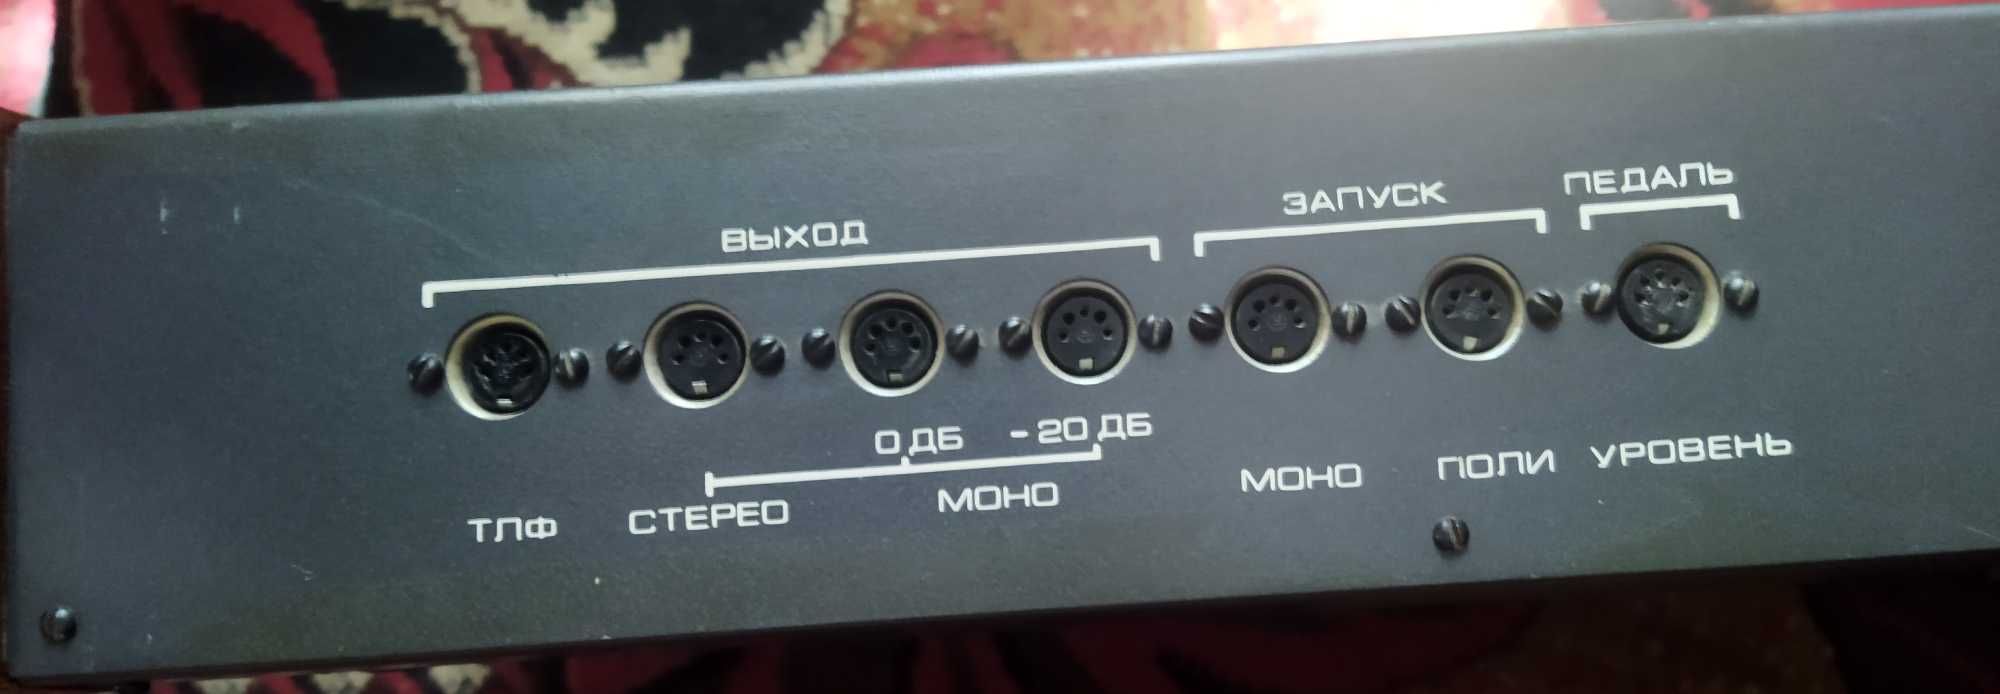 Электроника ЭМ-25 синтезатор СССР УВАГА! ЧИТАЄМО УСЕ!